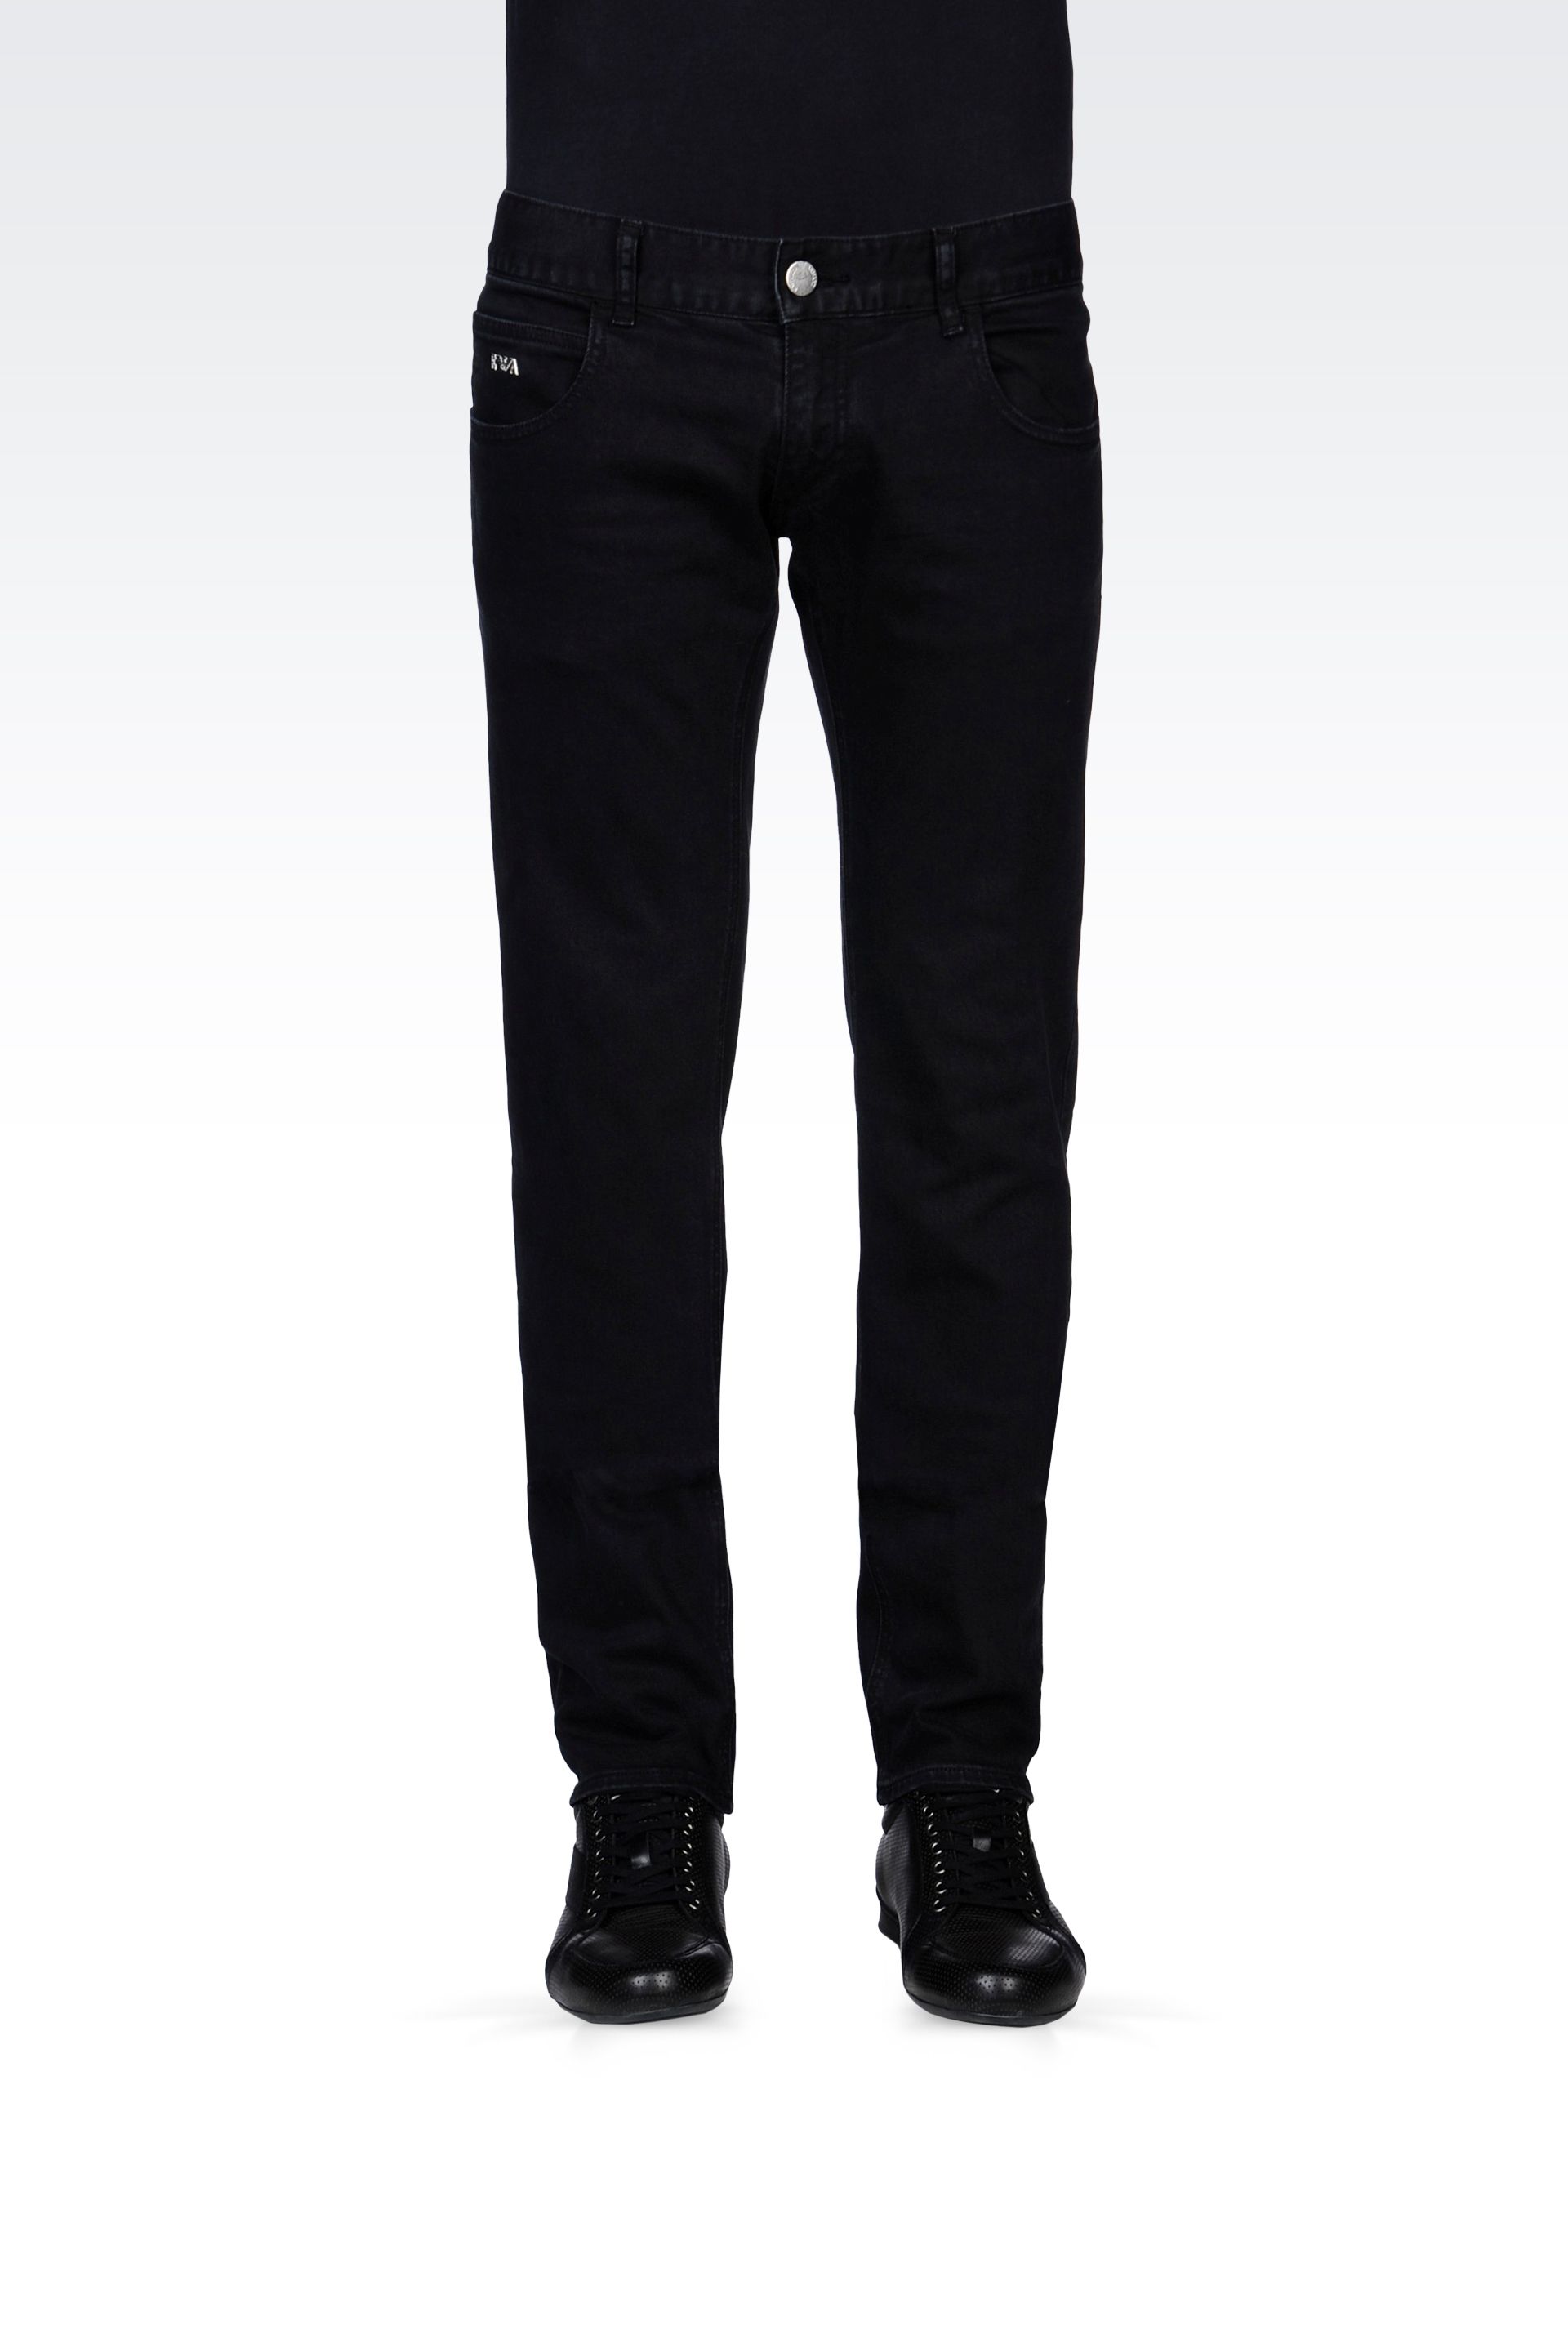 Lyst - Emporio Armani Slim Fit Clean Wash Jeans in Black for Men